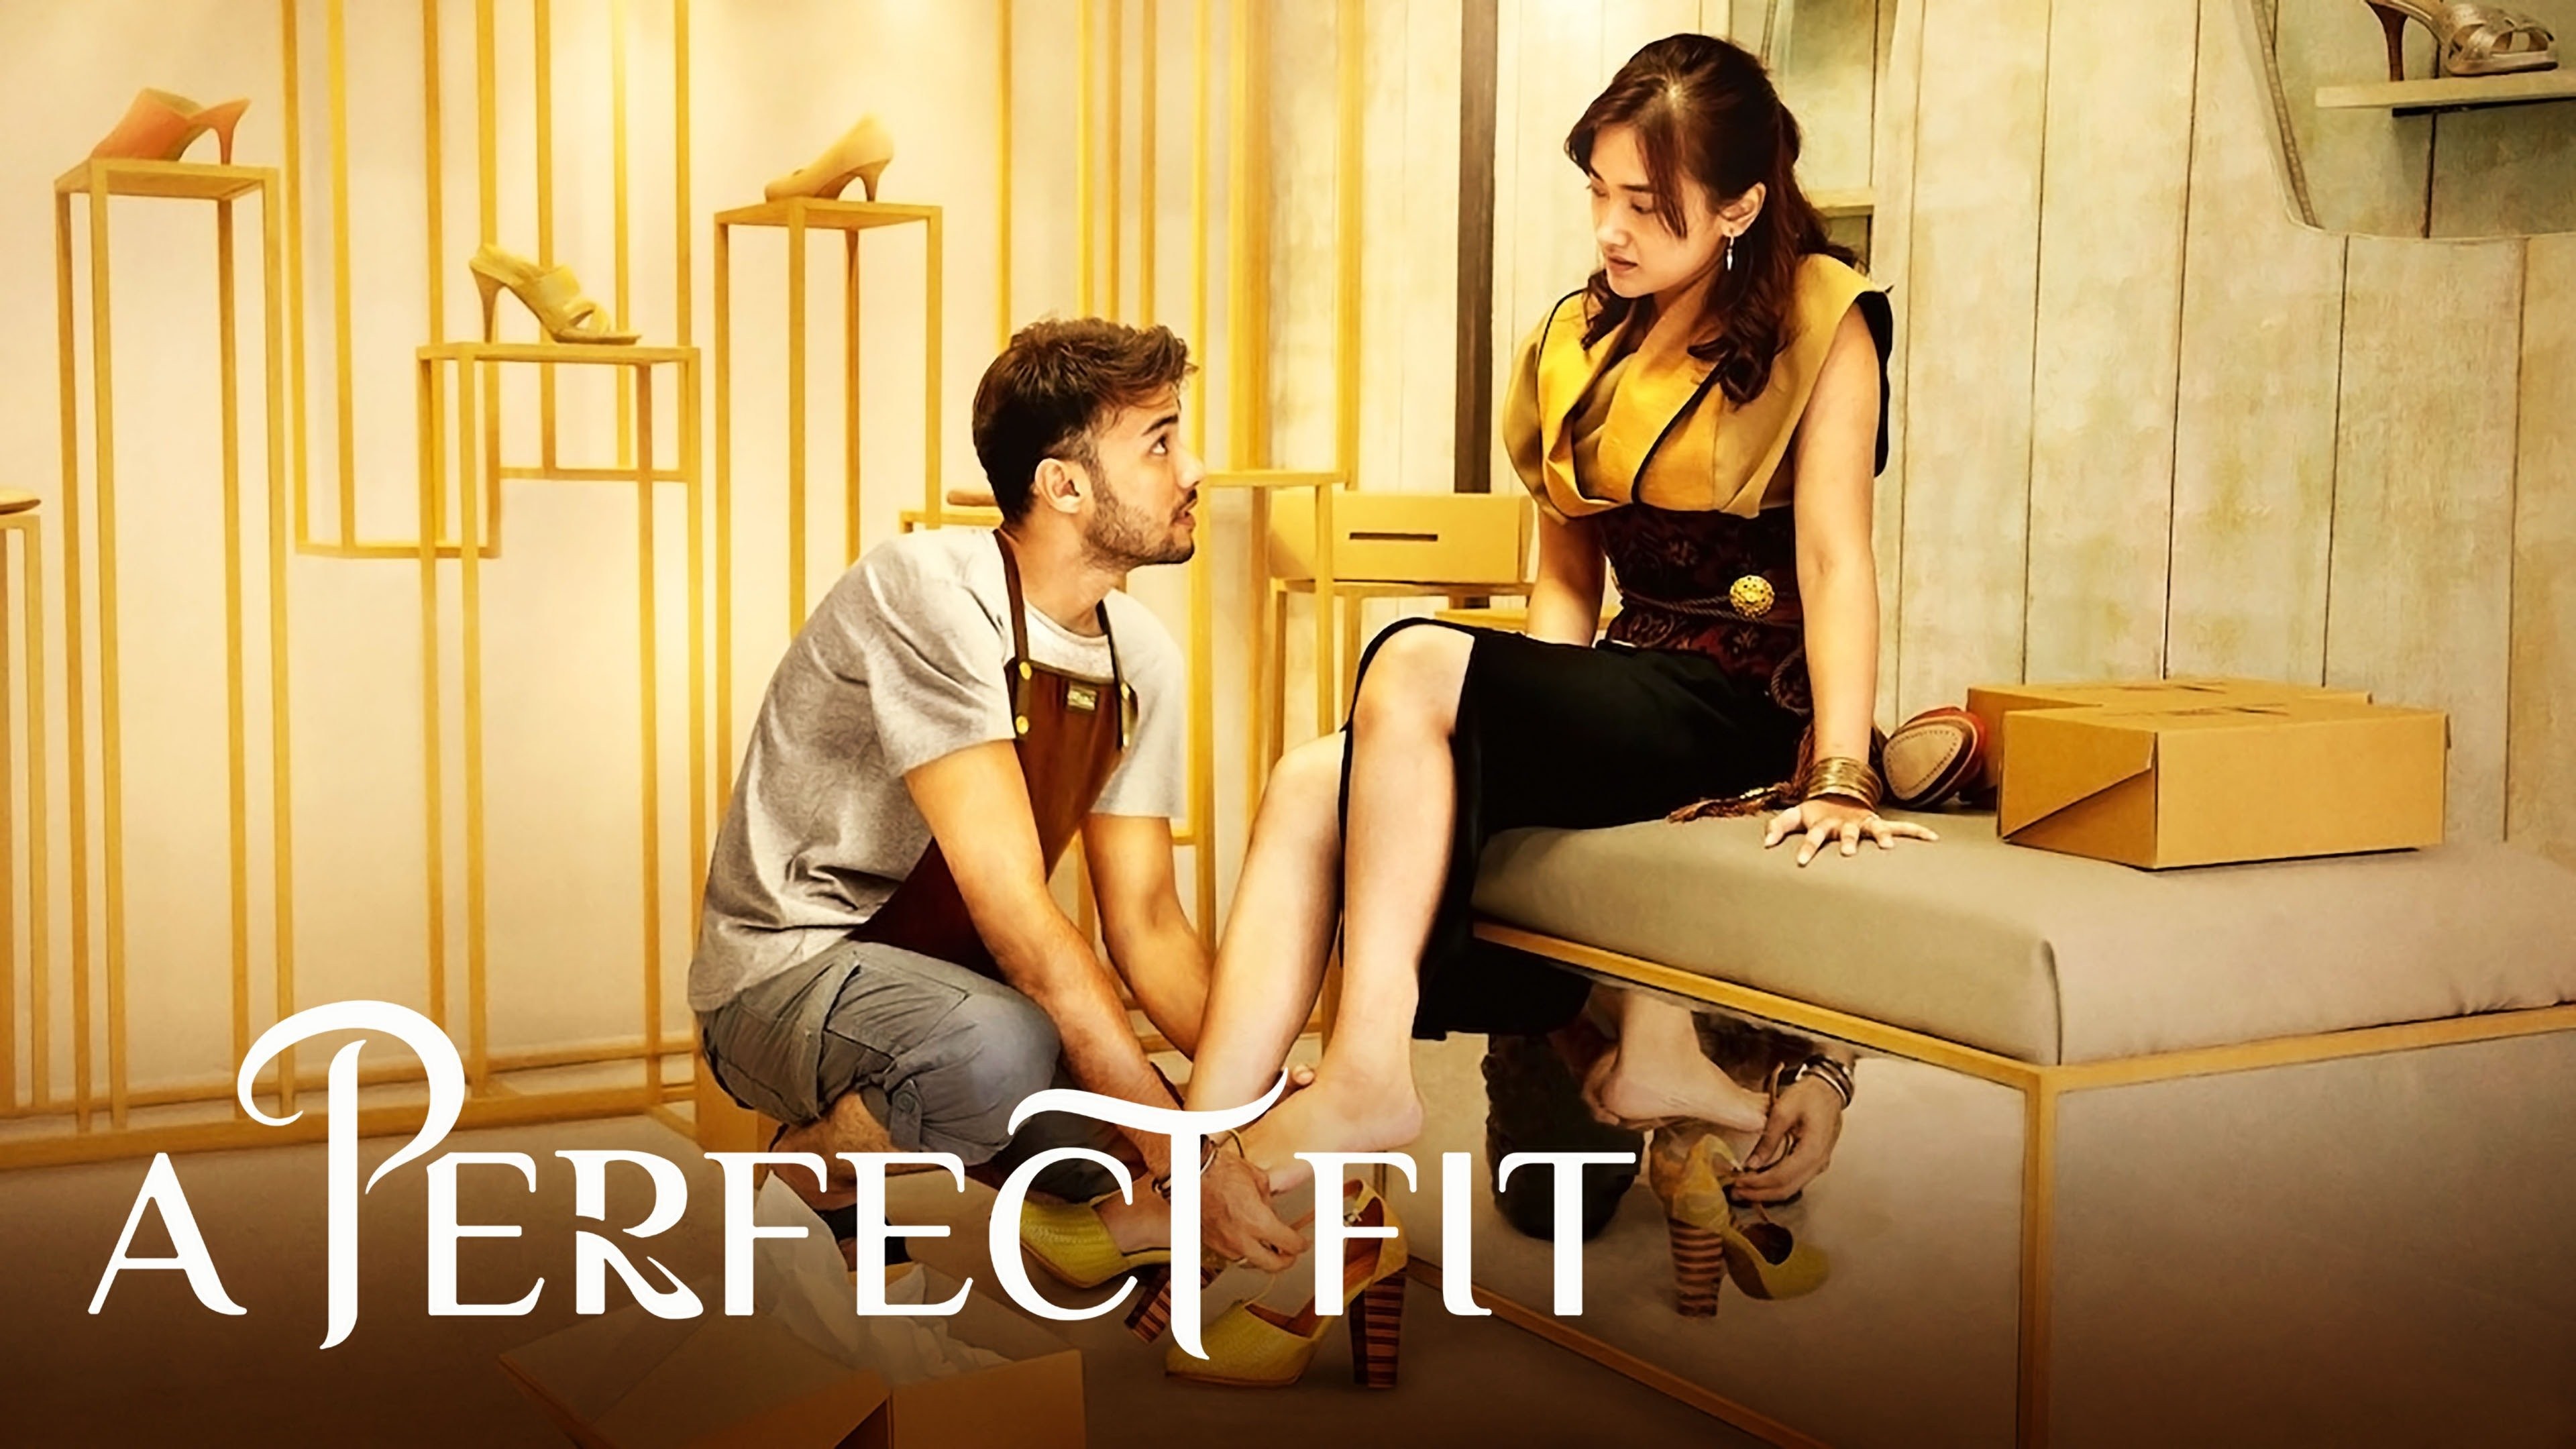 A Perfect Fit (2021 film) - Wikipedia